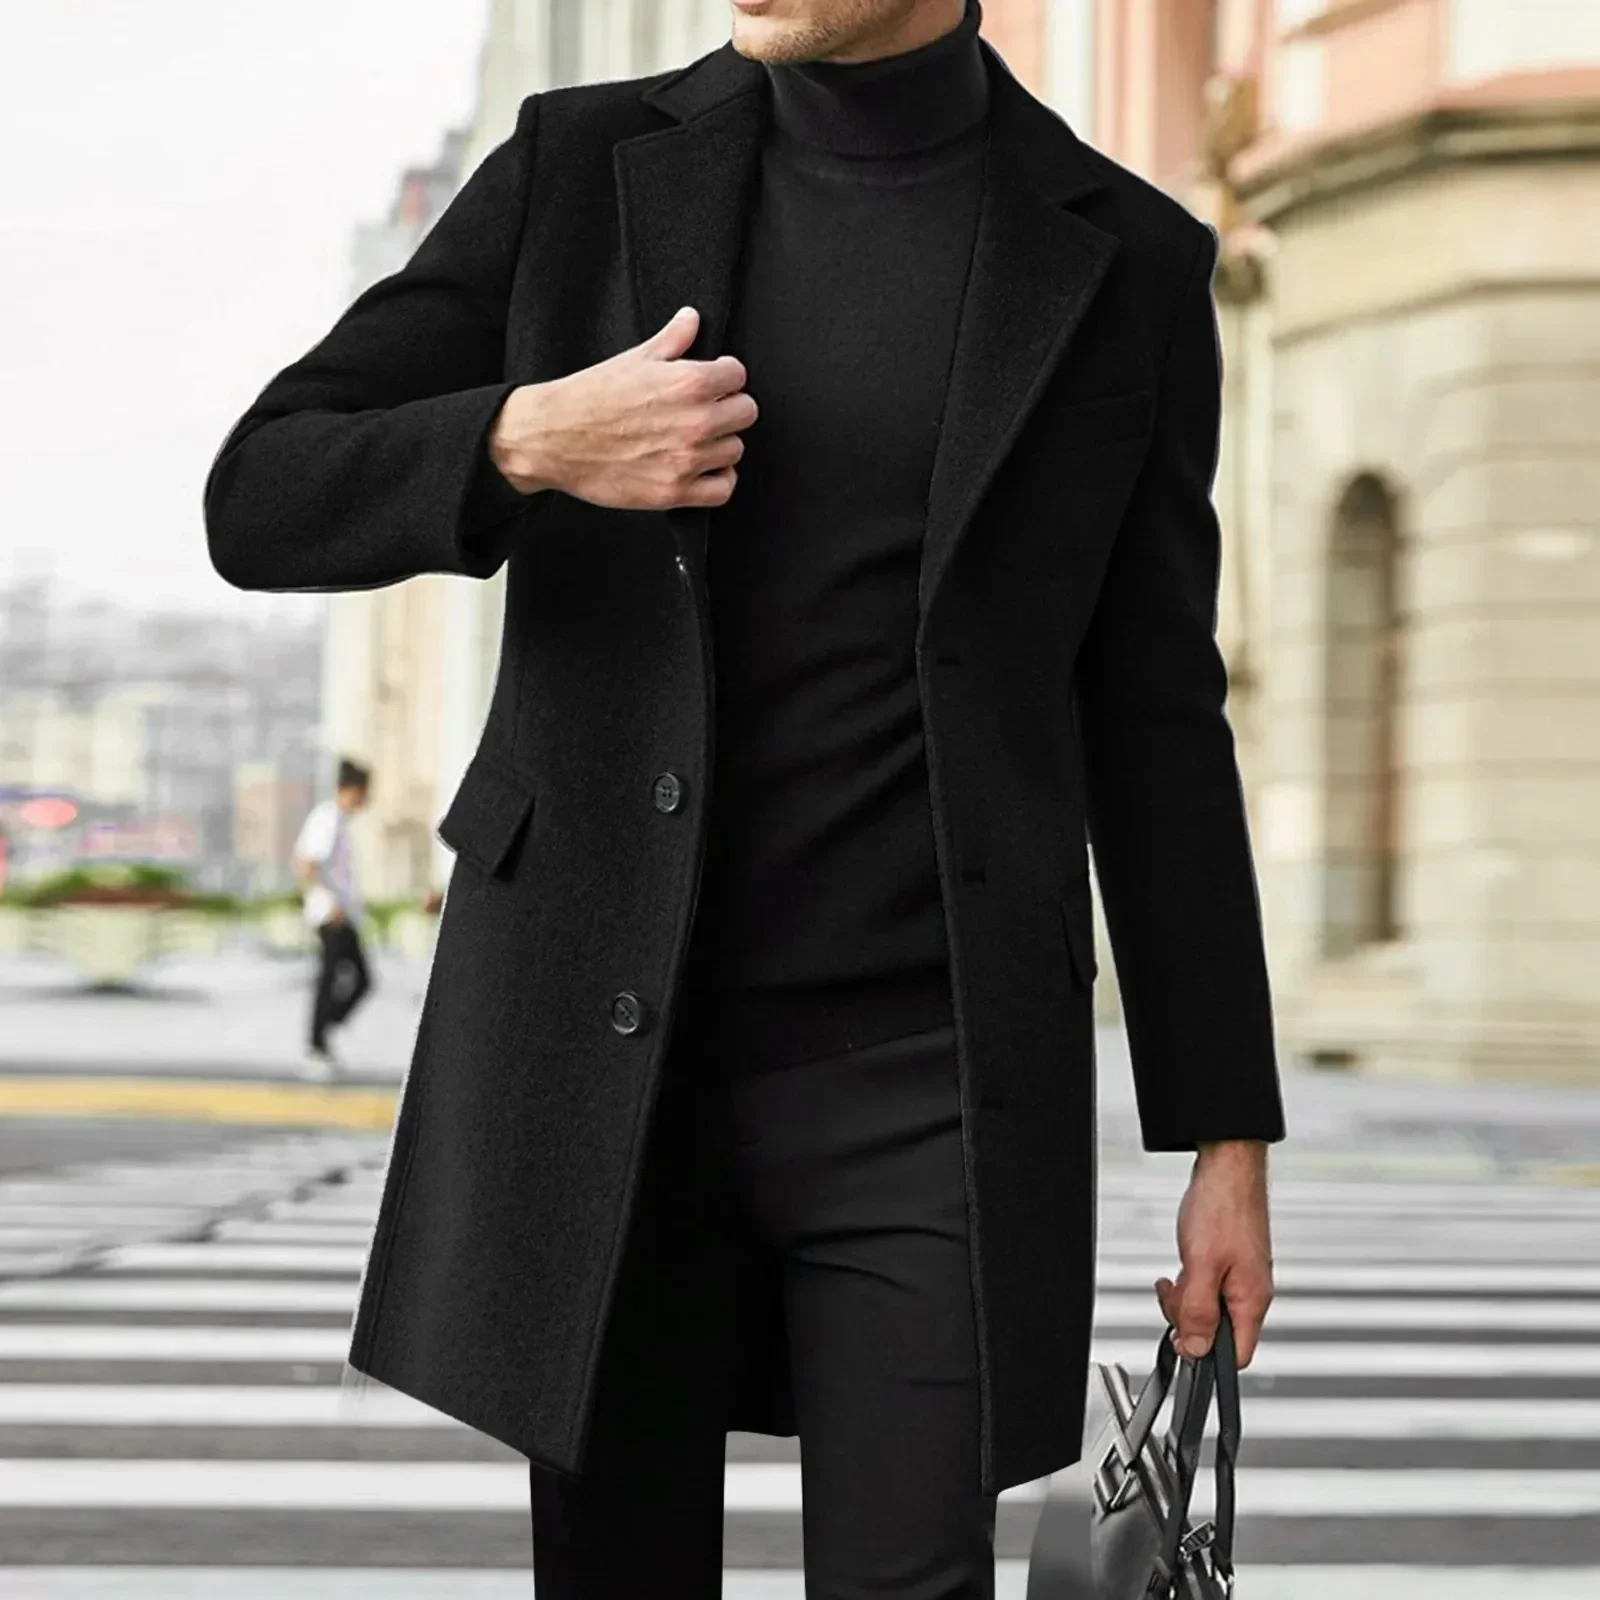 

Men's Trench Coats for Men Overcoats Wool Blends Business Trench Long Jacket Overcoat Male Fit Coat Jackets Windbreaker Clothing